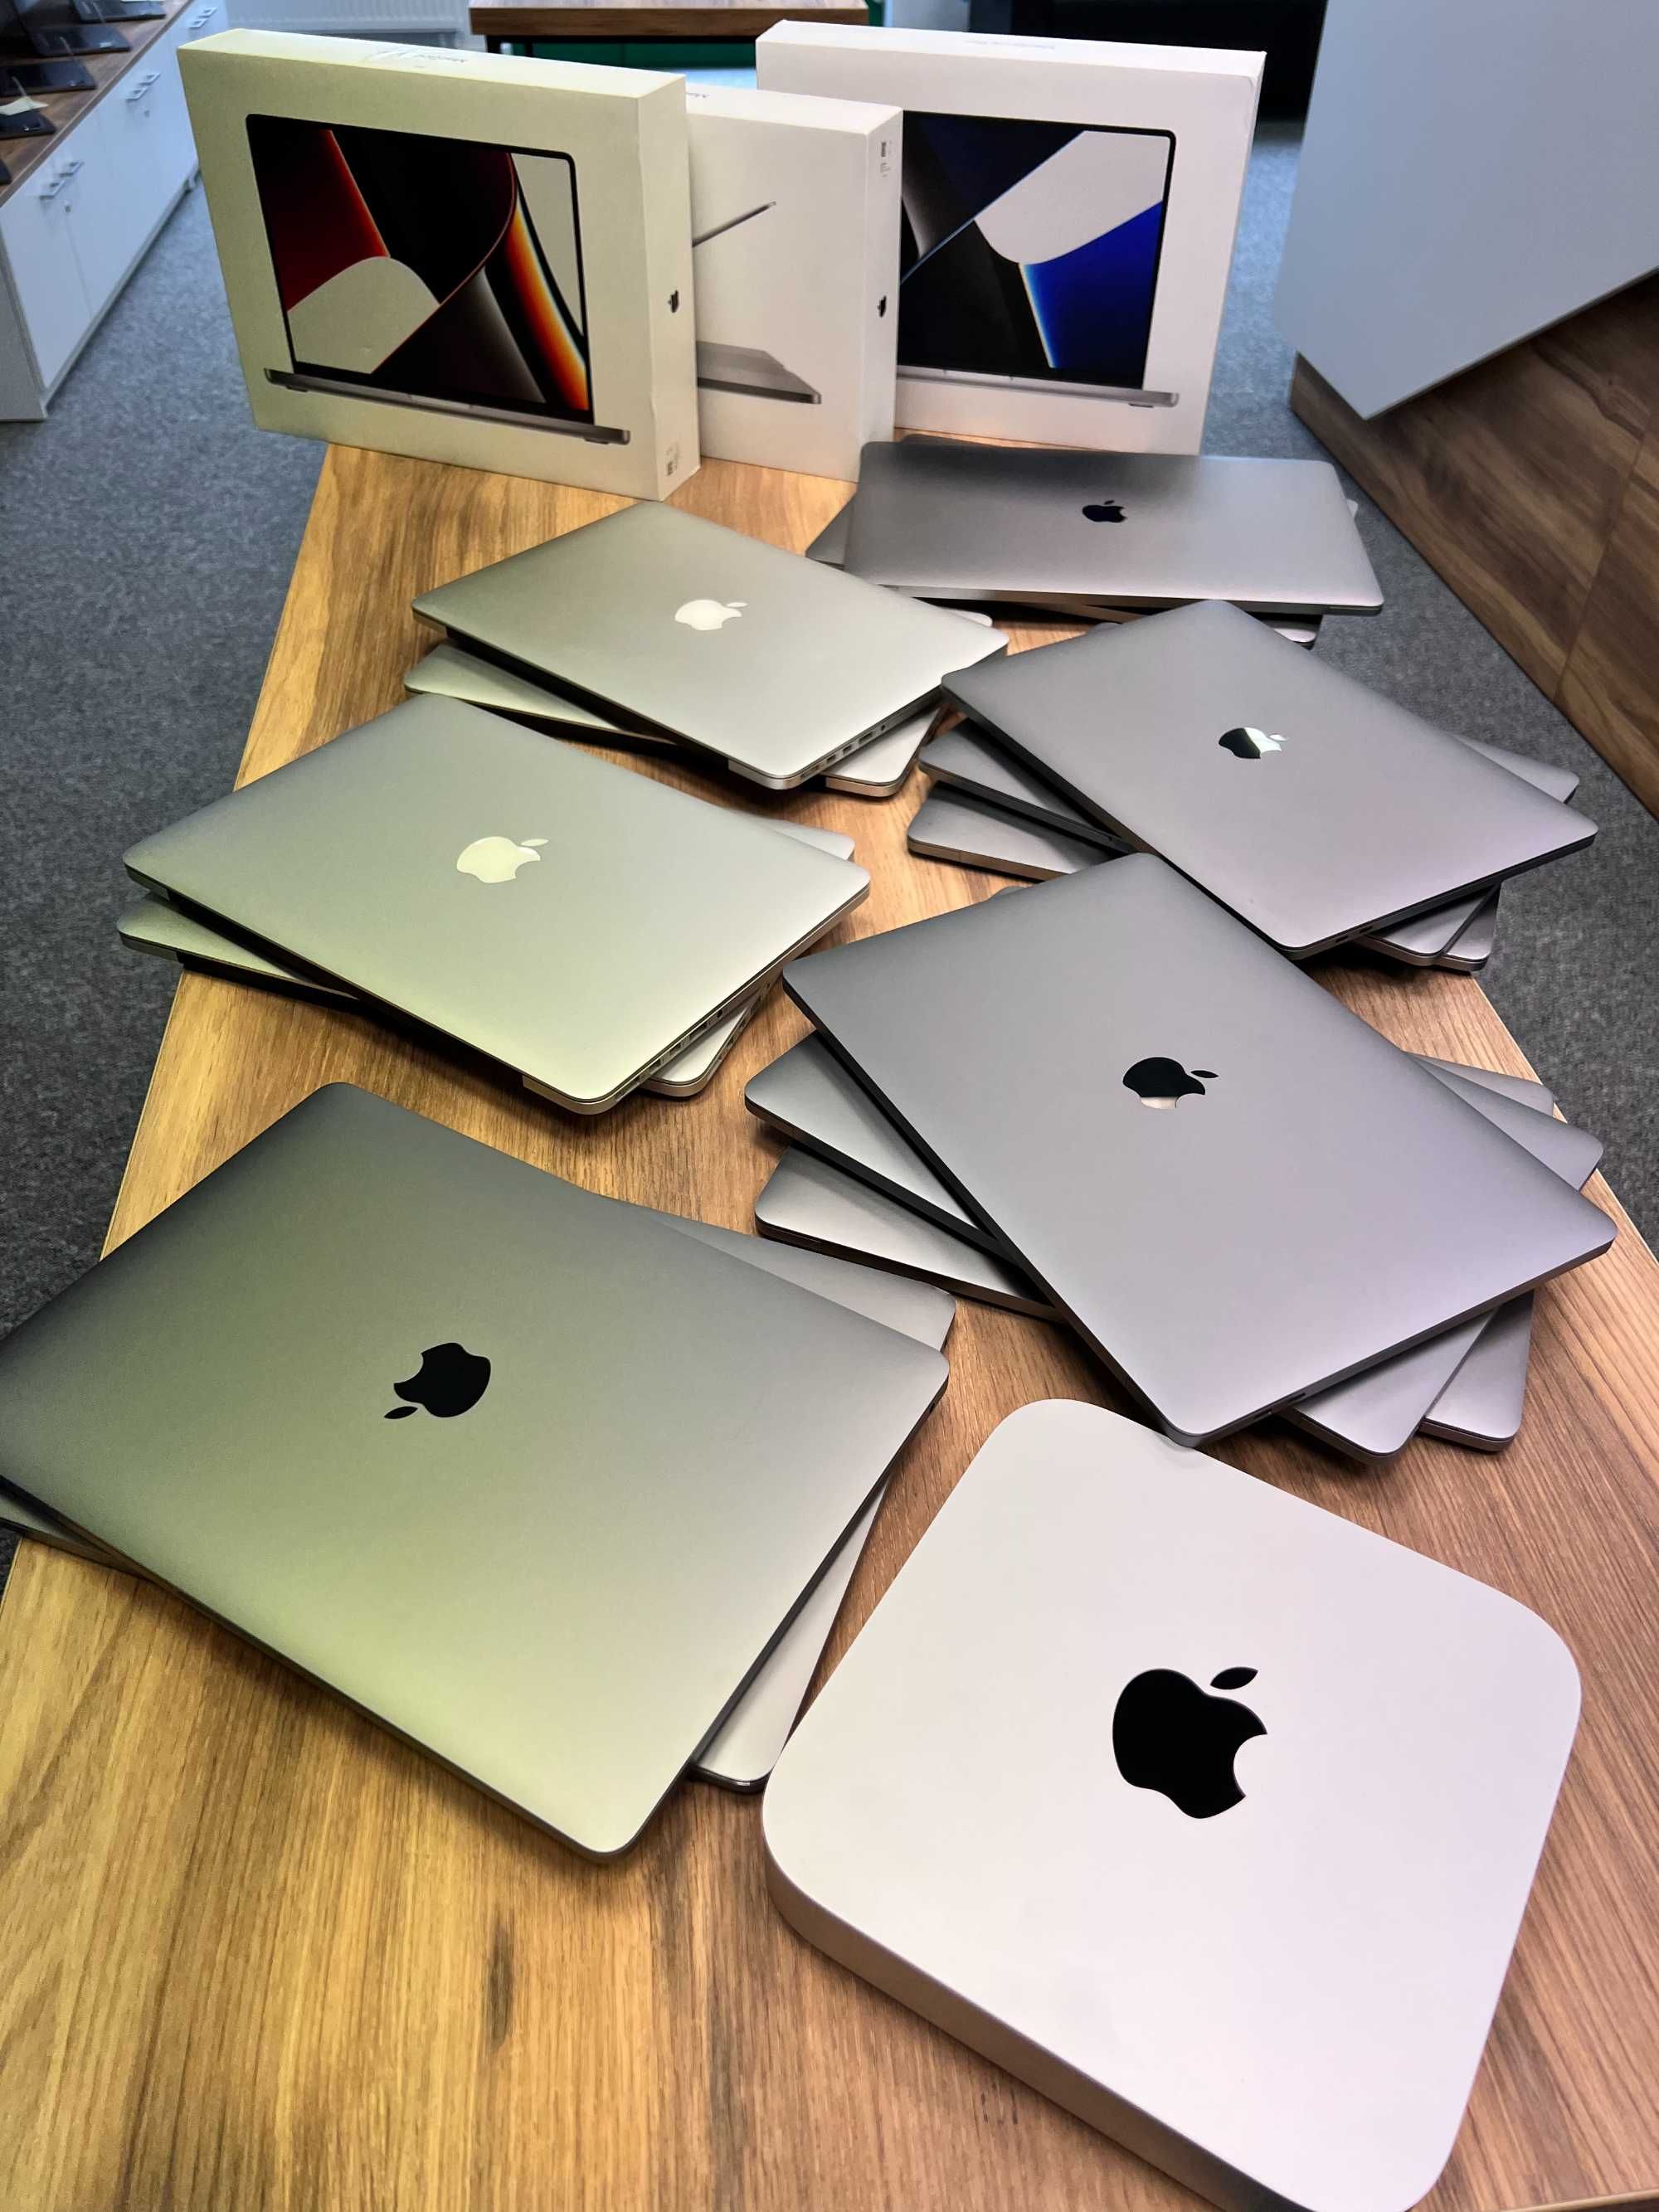 Apple MacBook Pro 15 Air 13, M1 Gwarancja, Faktura Duży Wybór